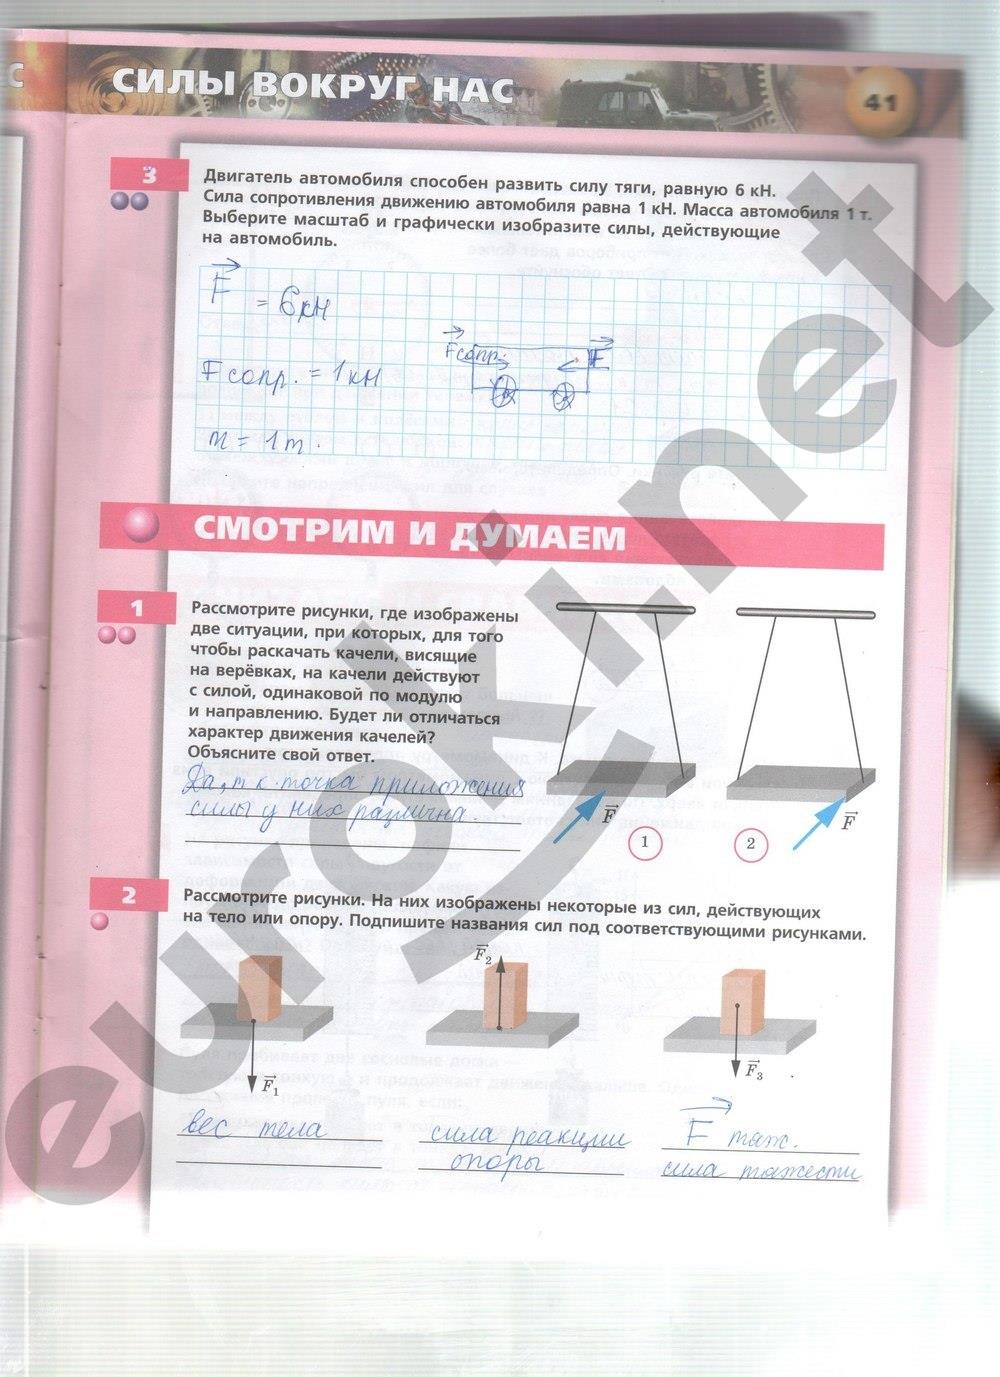 гдз 7 класс тетрадь-тренажер страница 41 физика Артеменков, Белага